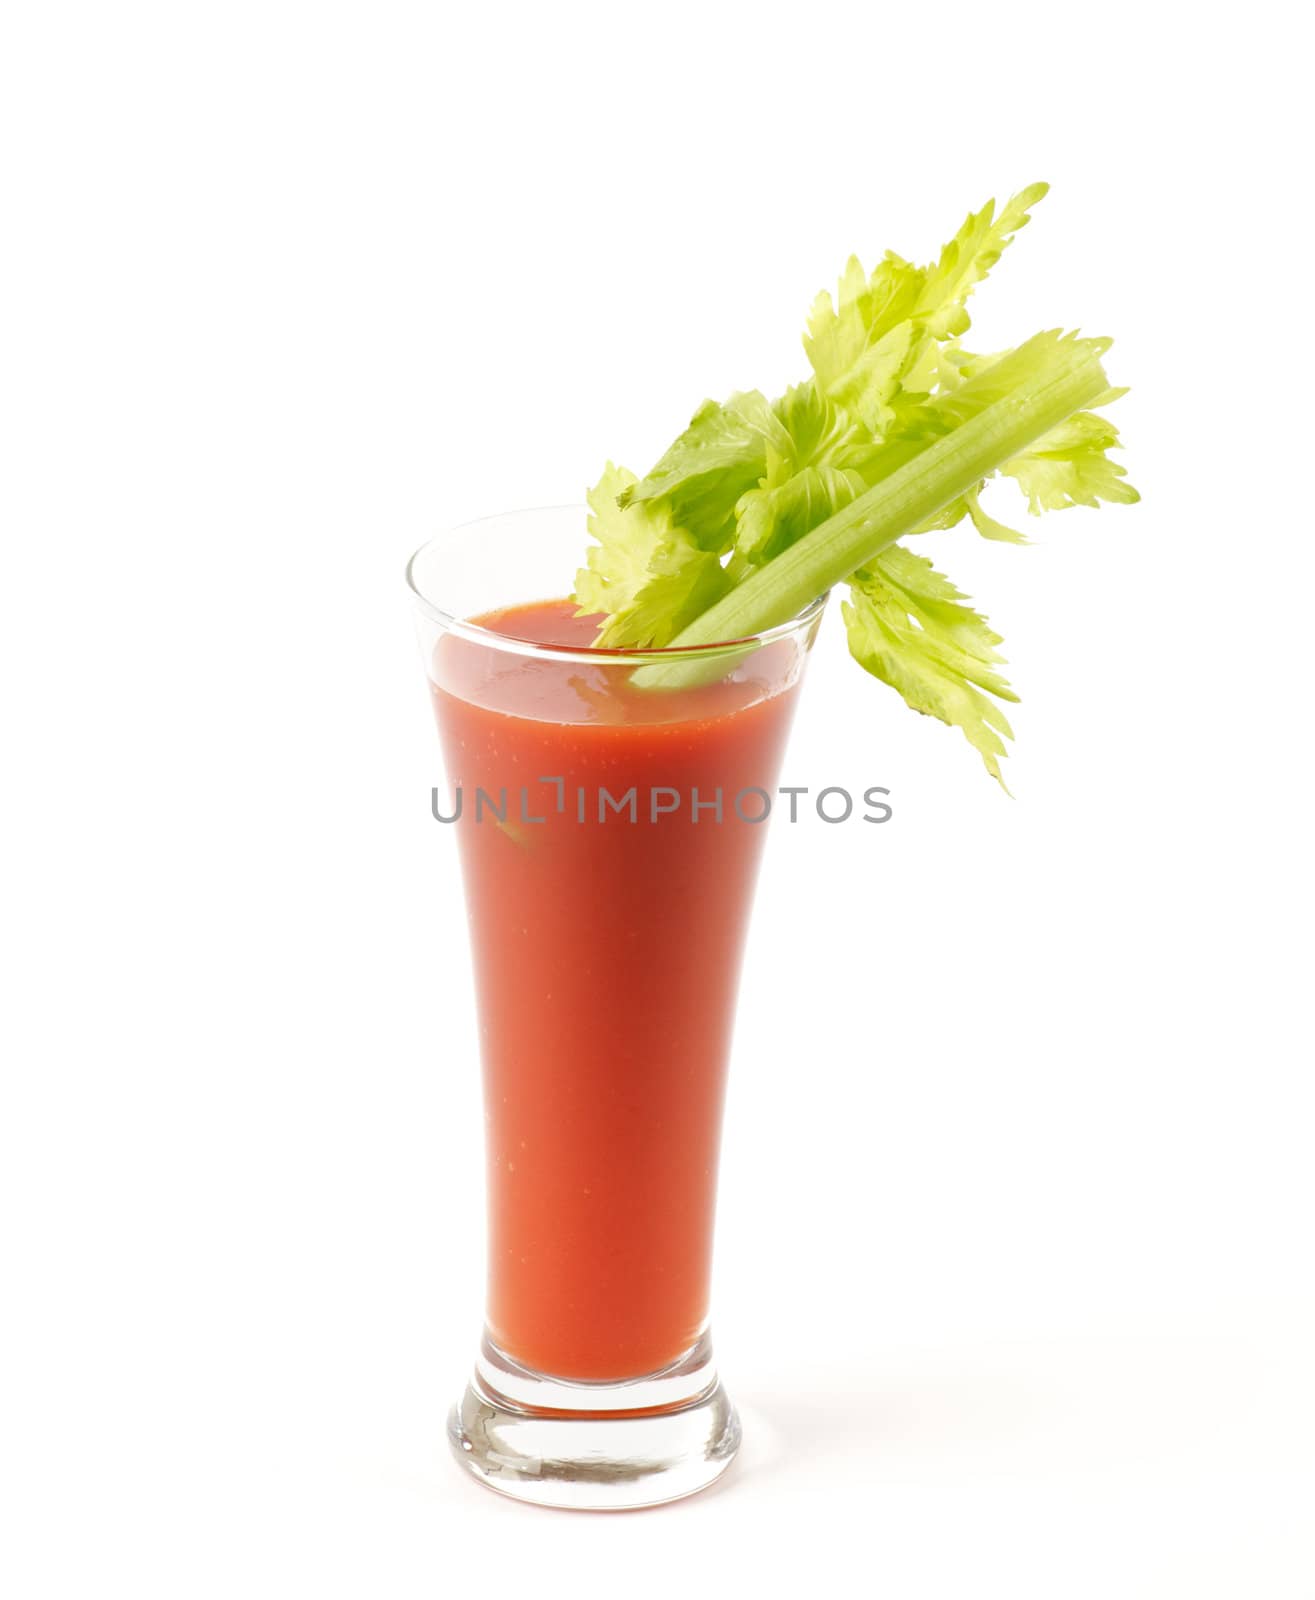 Tomato juice by zhekos